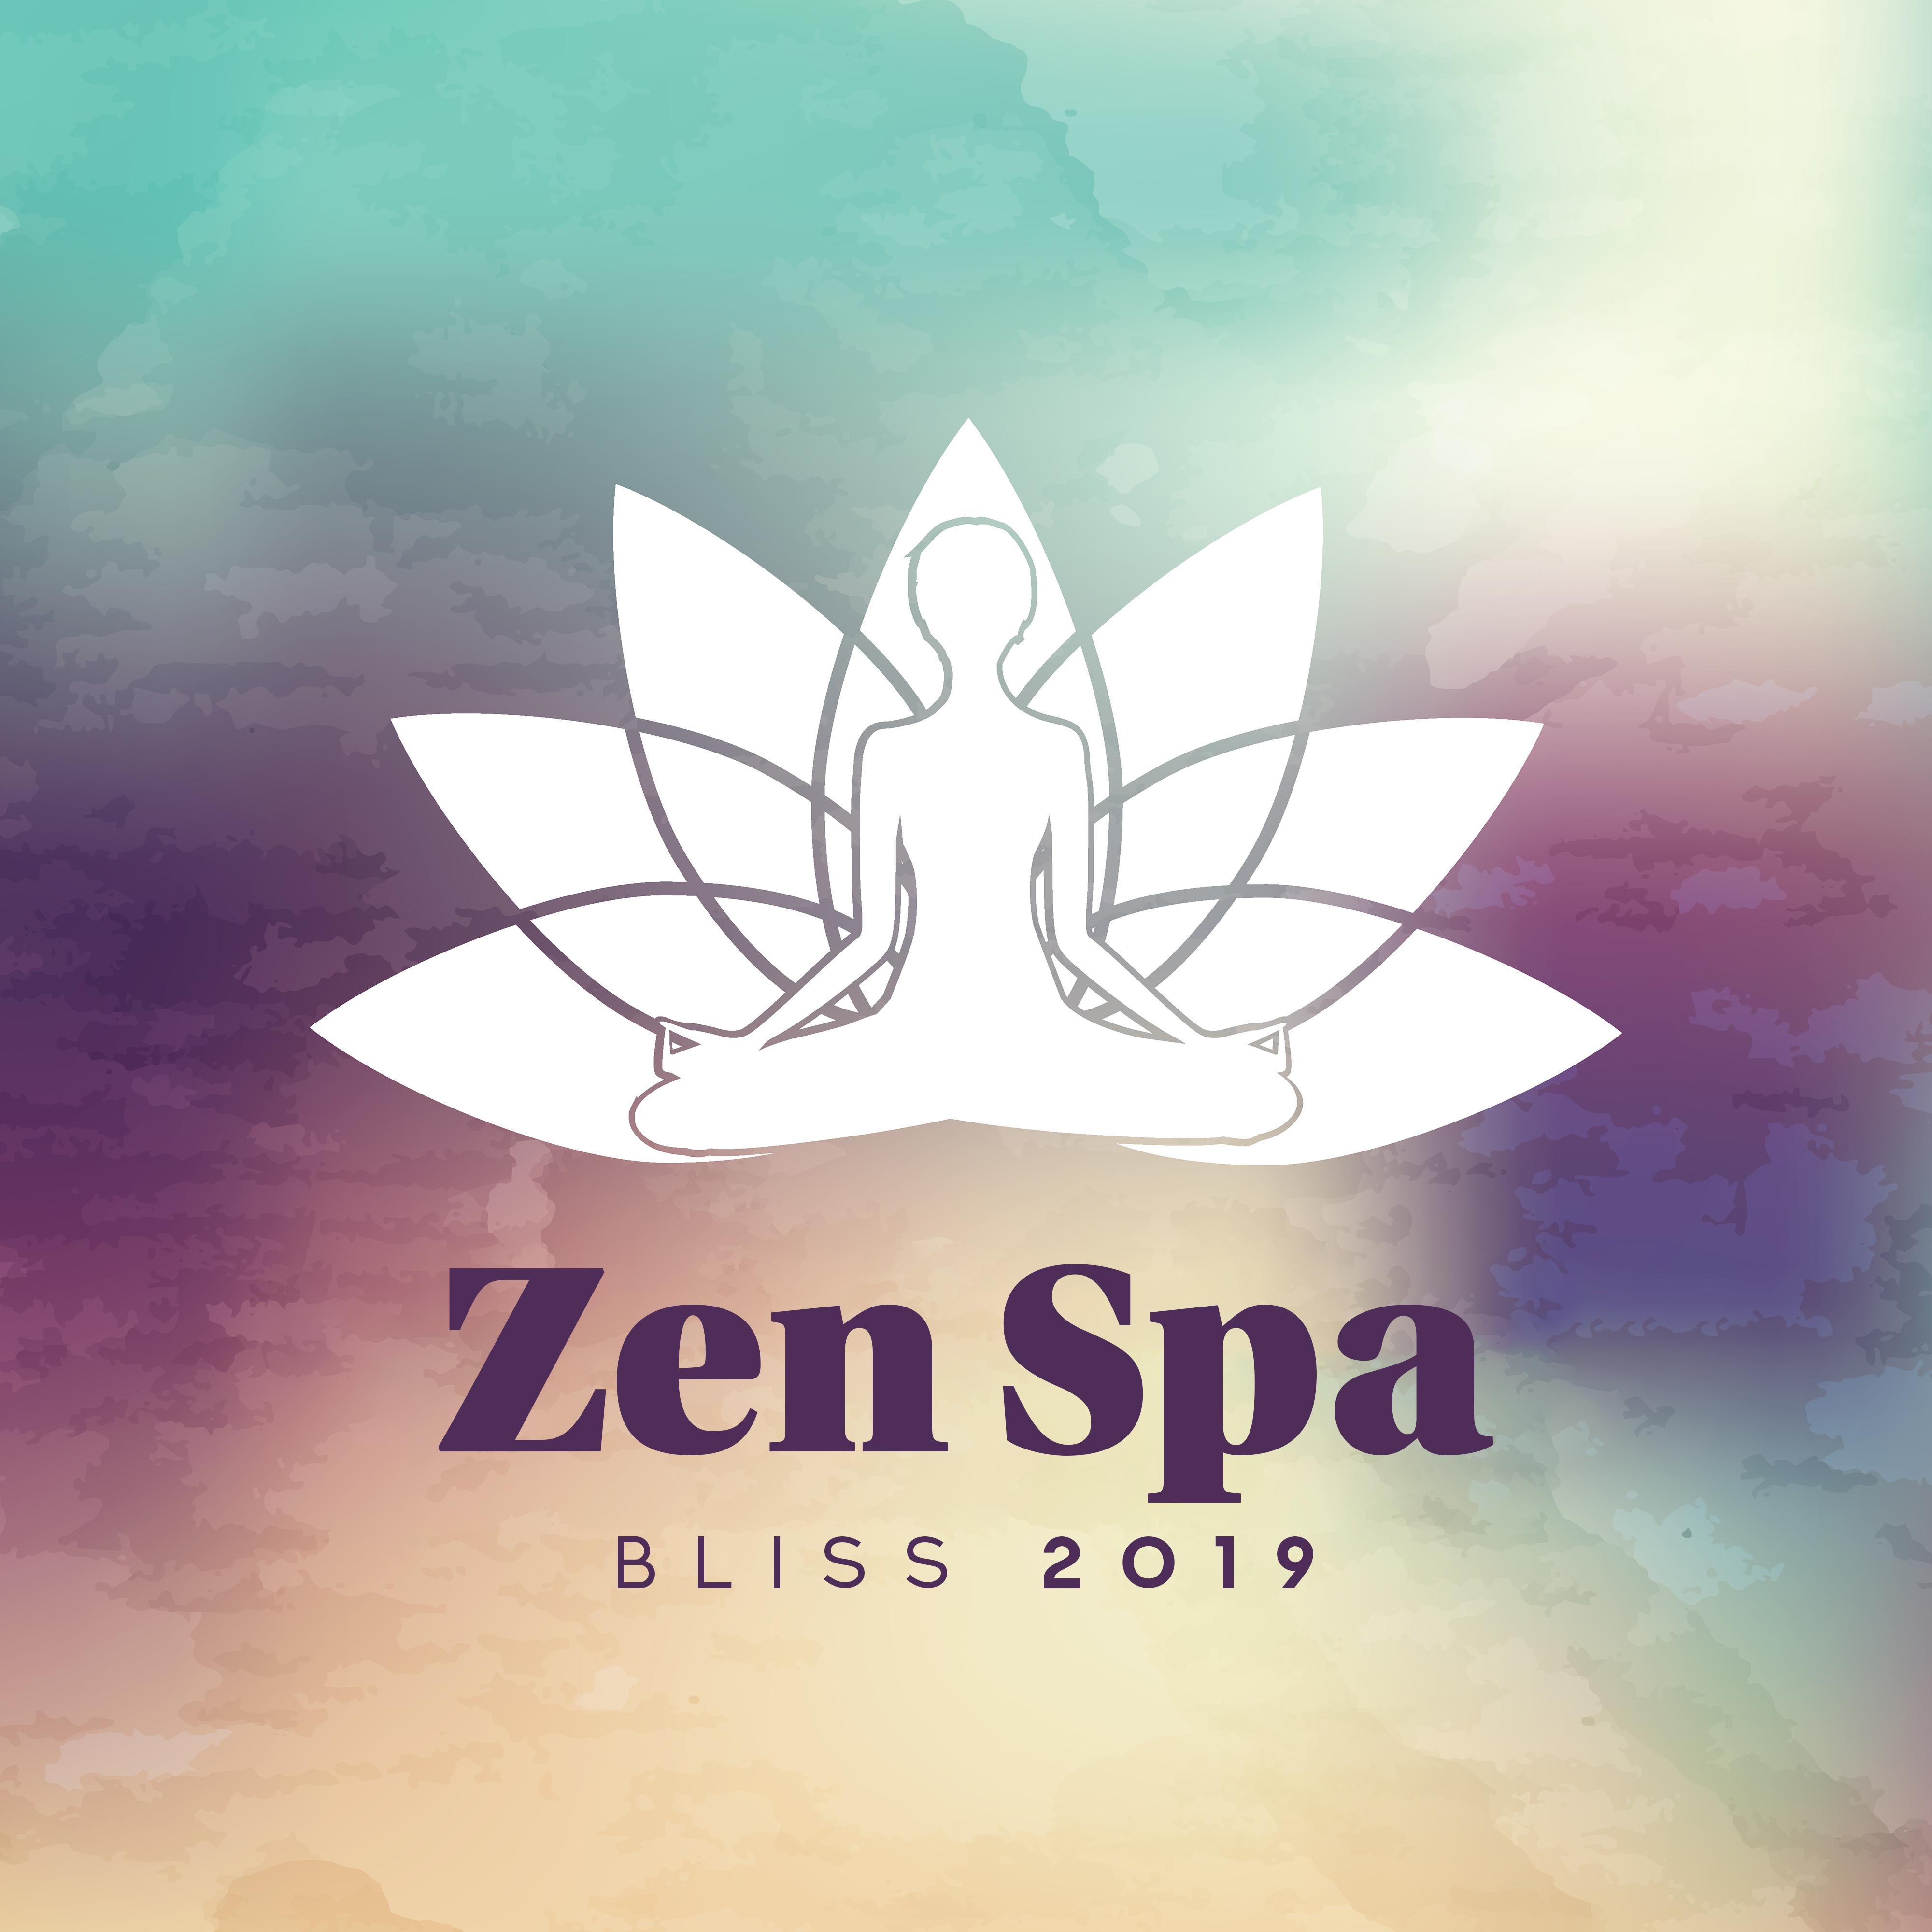 Zen Spa Bliss 2019: New Age Soft Music for Spa Salon, Wellness, Hot Bath & Healing Massage Therapy